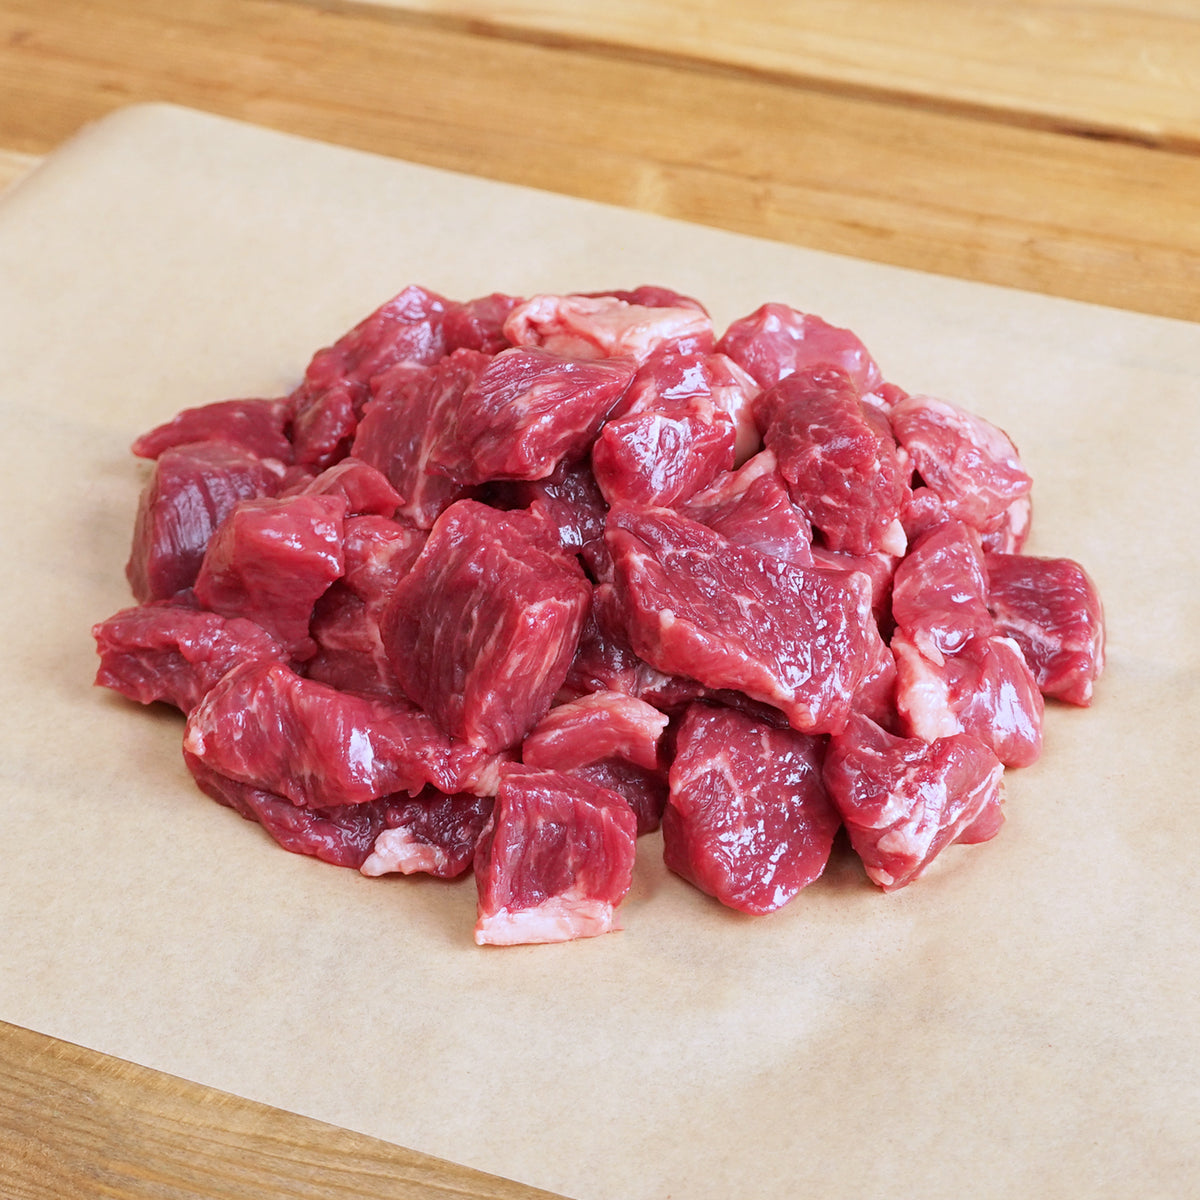 Grass-Fed Premium Beef Stew Cuts (300g) - Horizon Farms